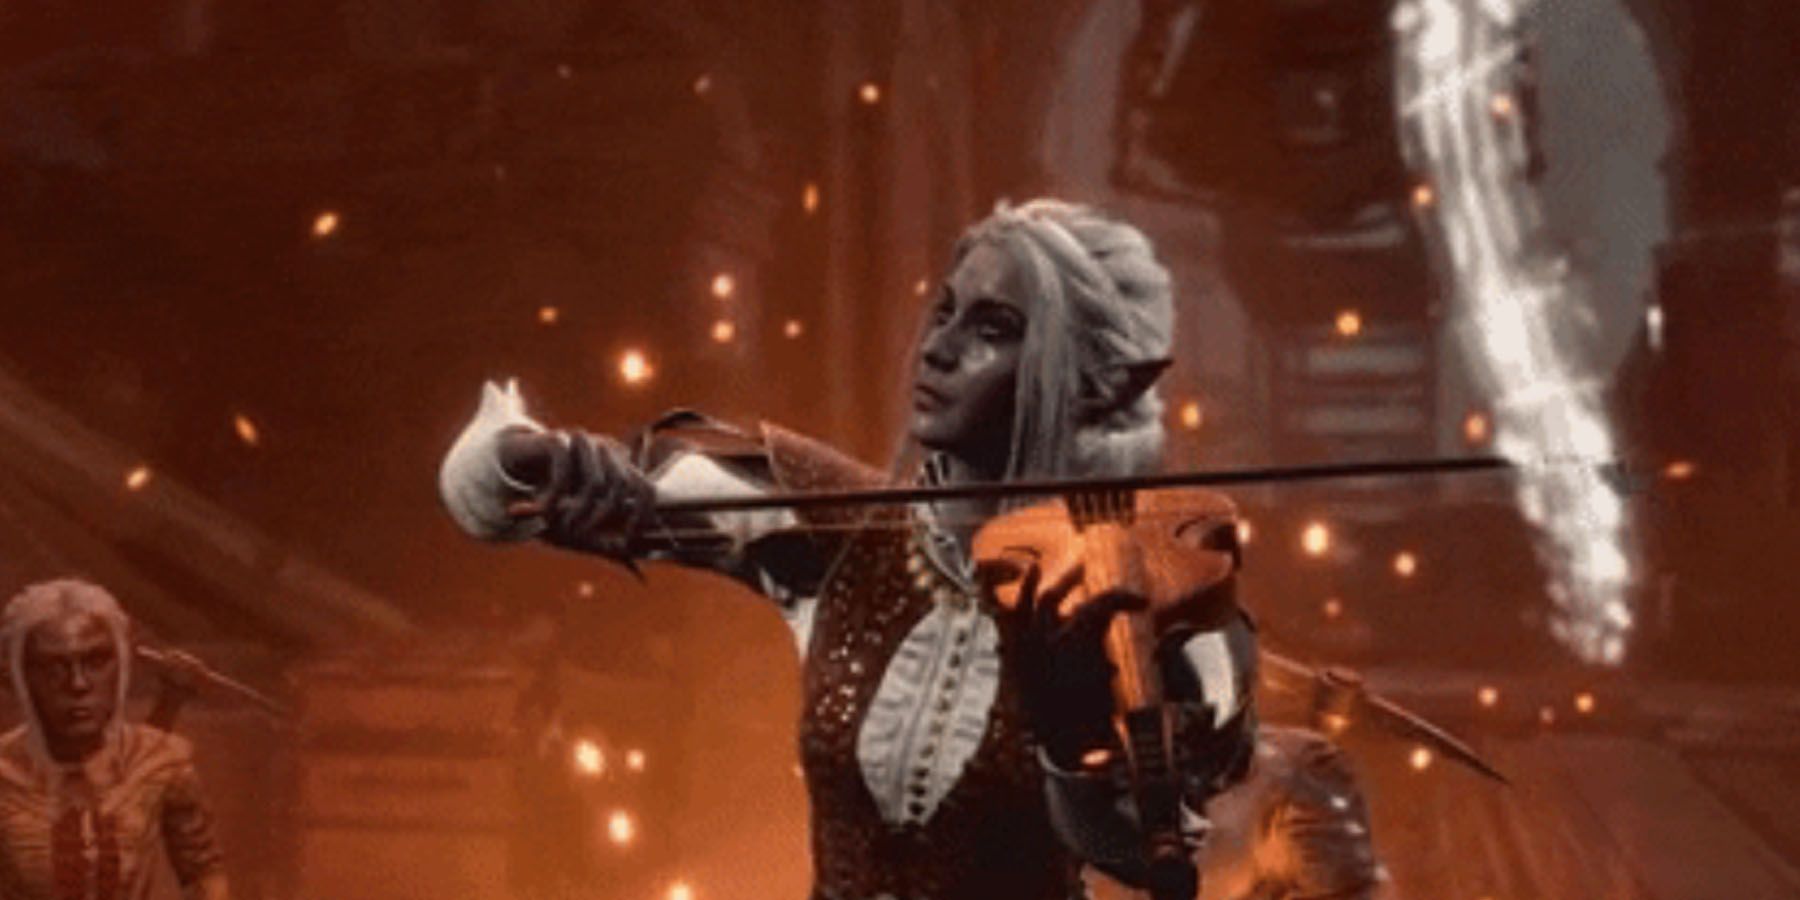 A Bard playing the violin